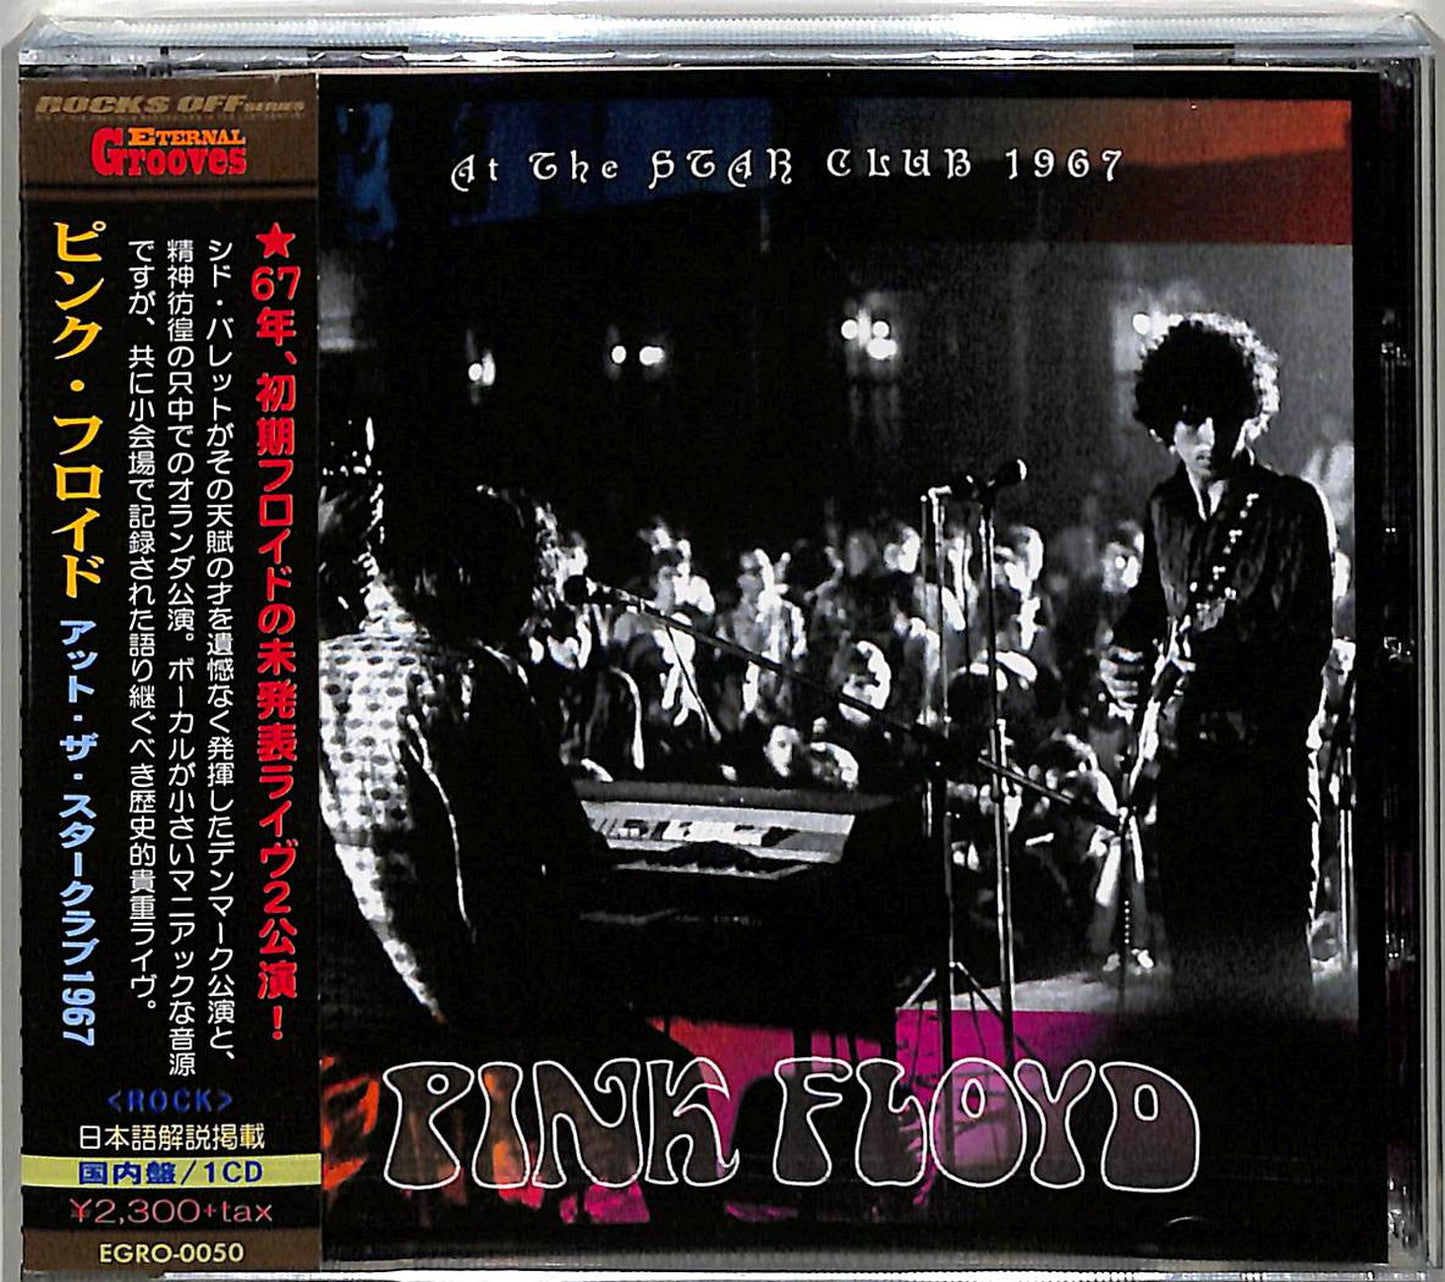 Pink Floyd - At The Star Club 1967 - Japan CD